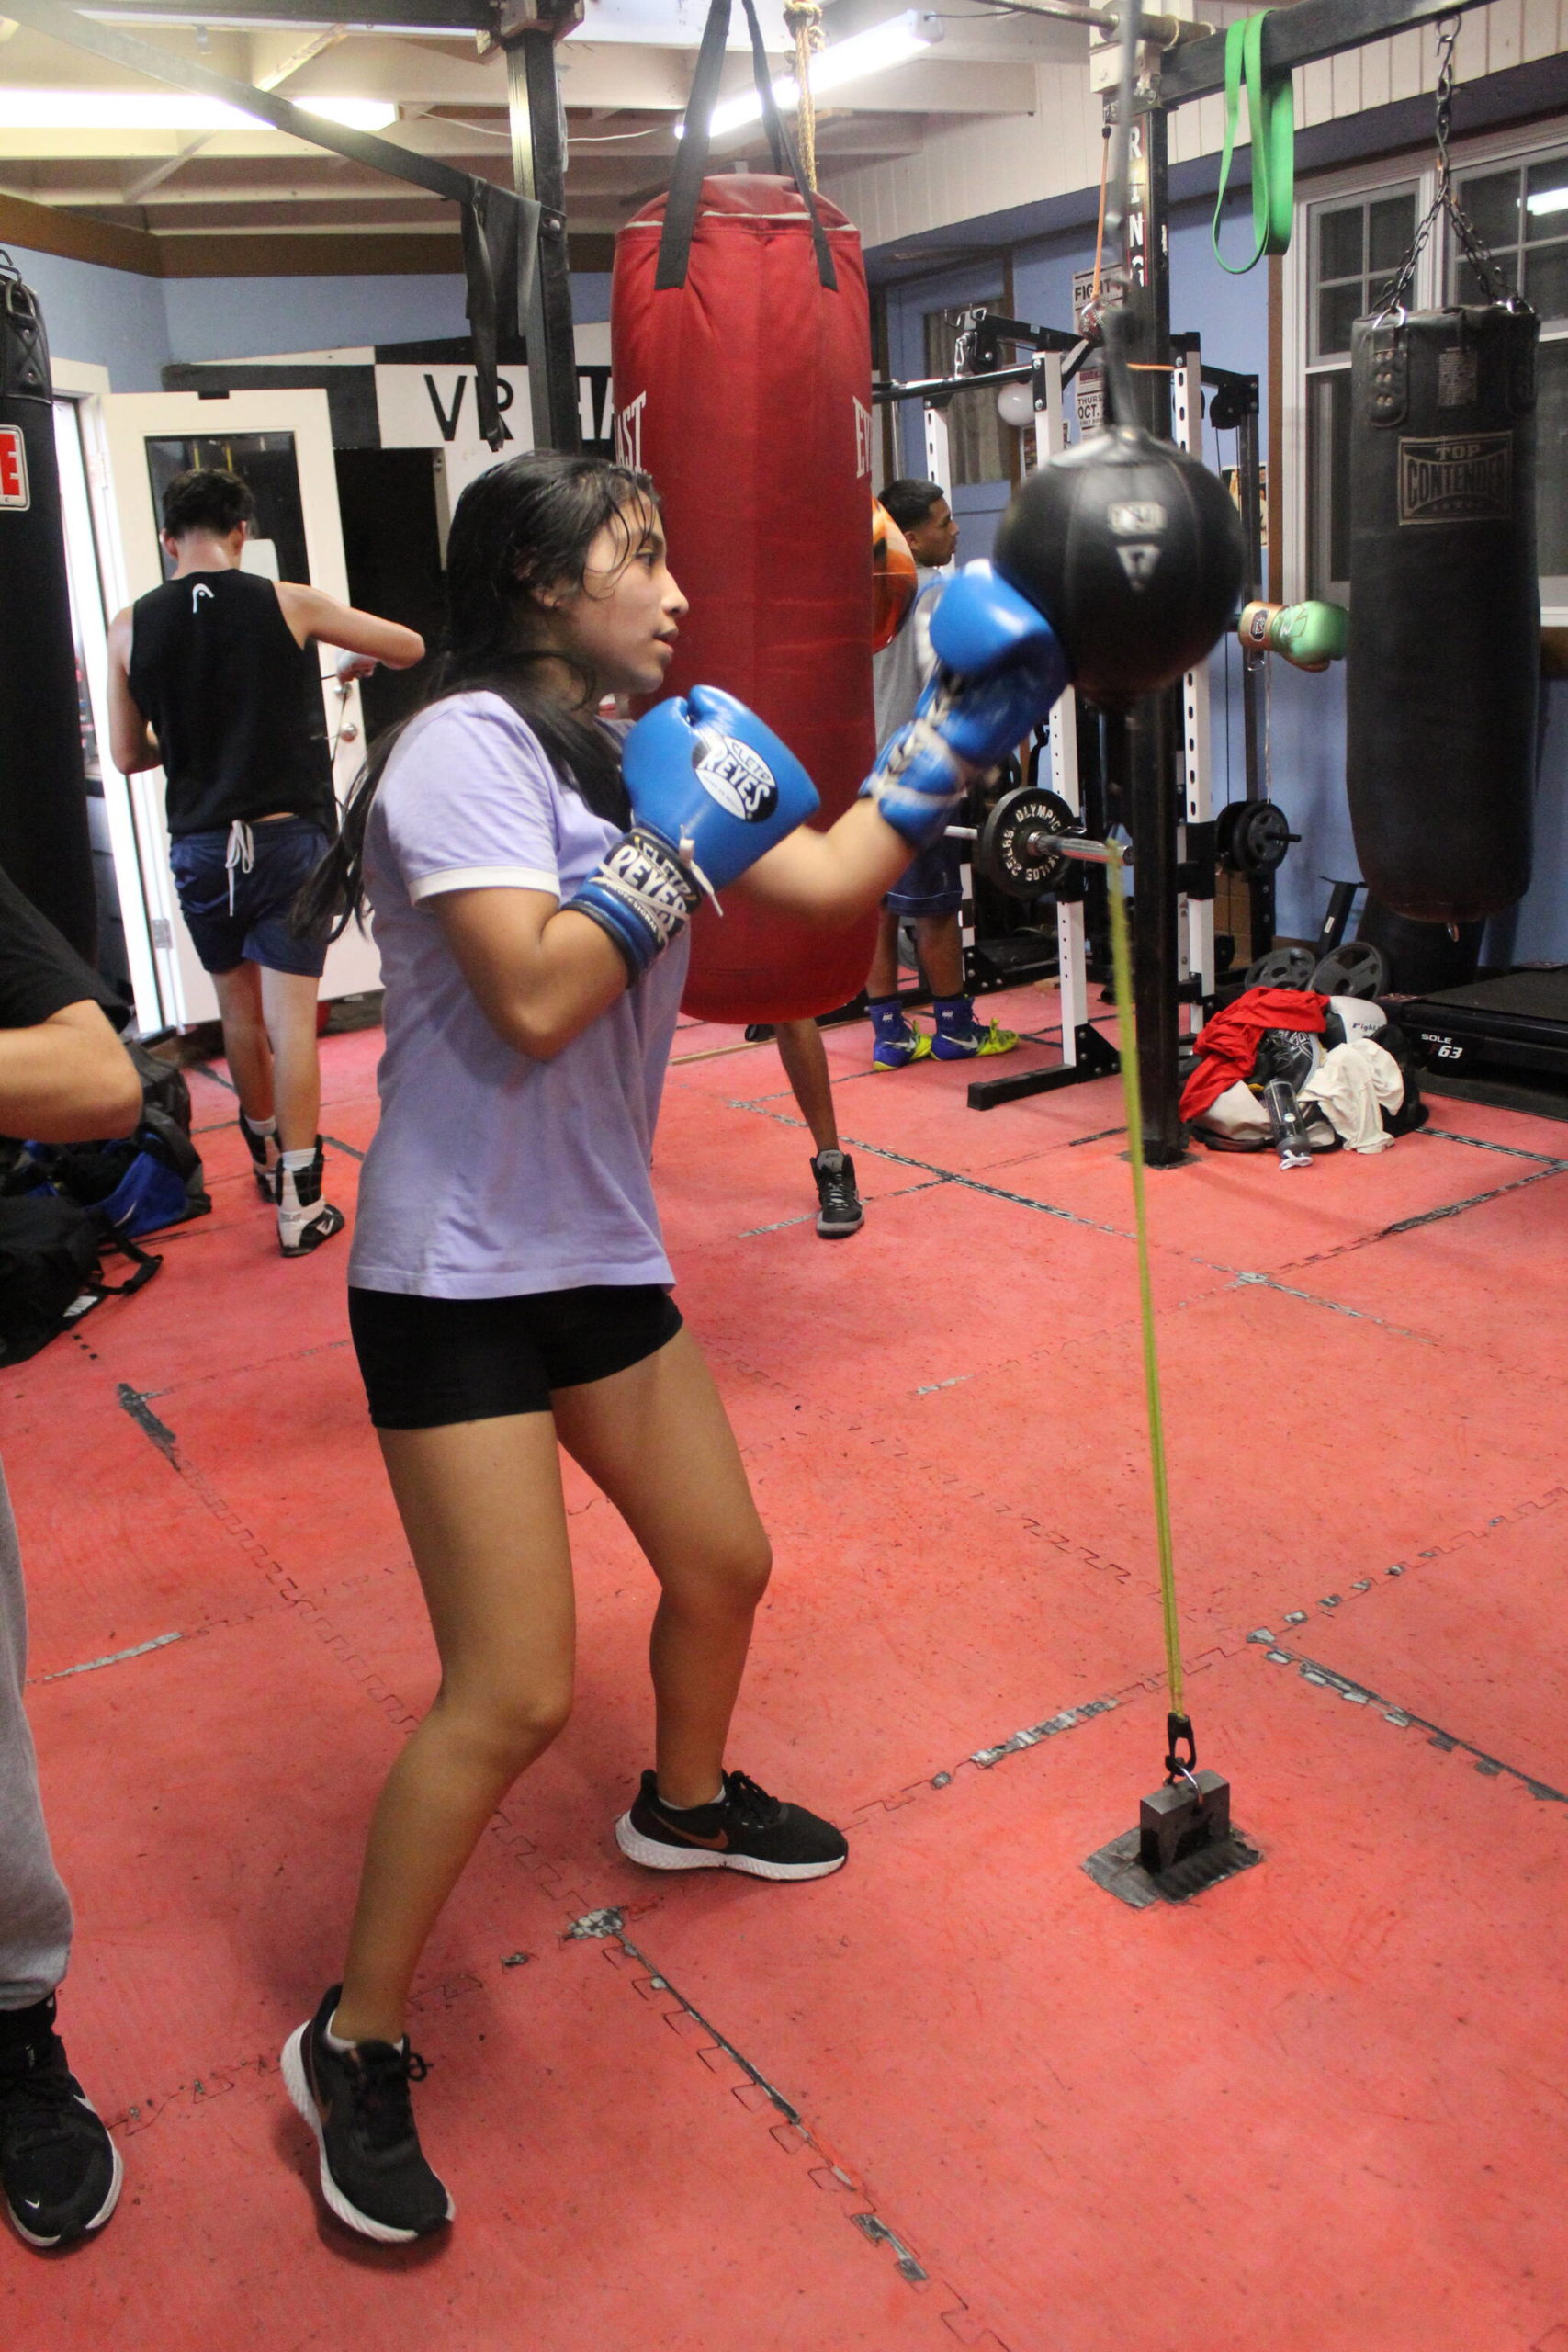 Bailey Jo Josie/Sound Publishing
Yaretzi Reyes, 14, wants to become a professional boxer.